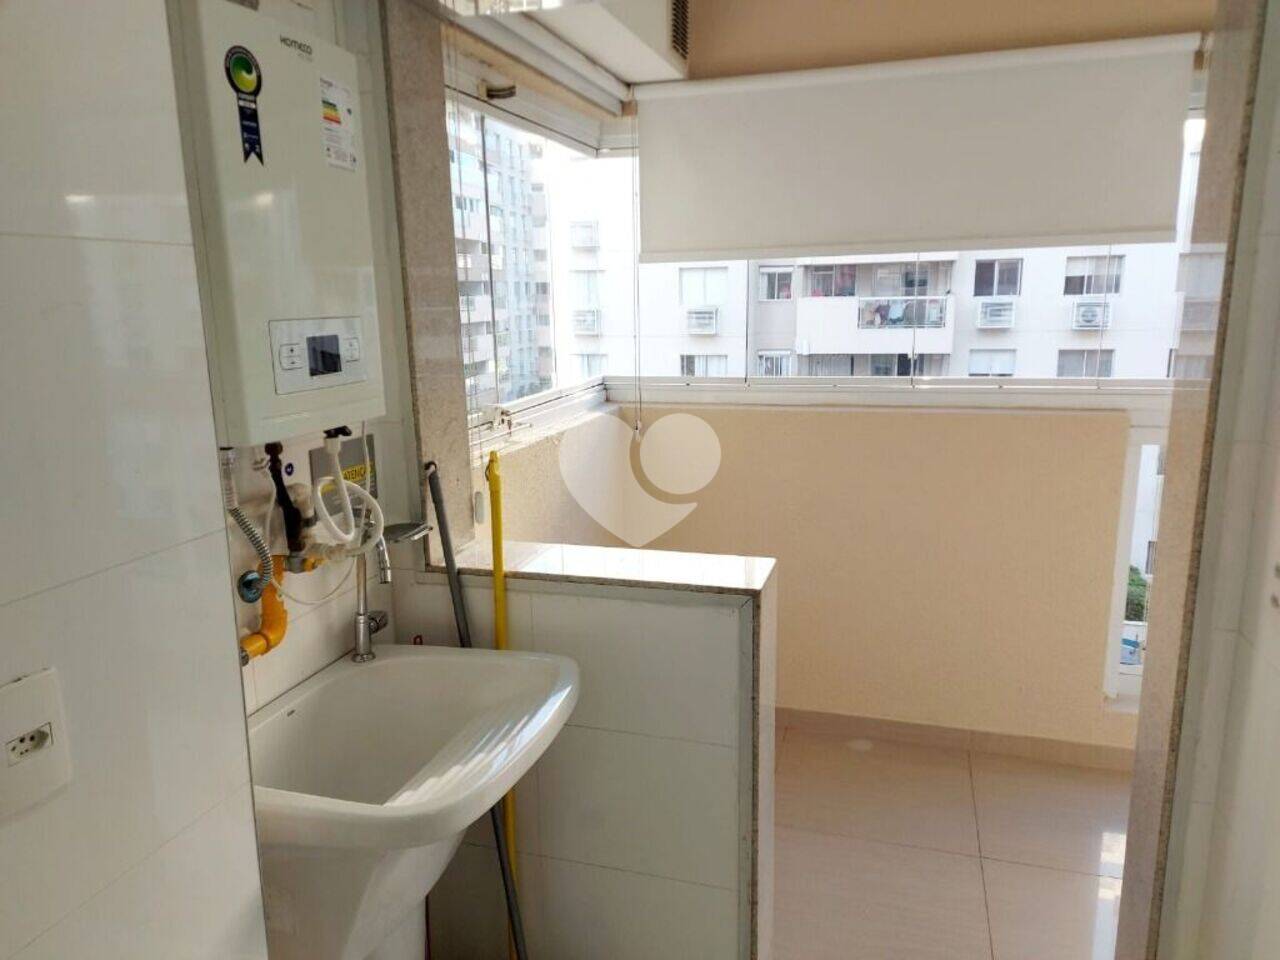 Apartamento Recreio dos Bandeirantes, Rio de Janeiro - RJ